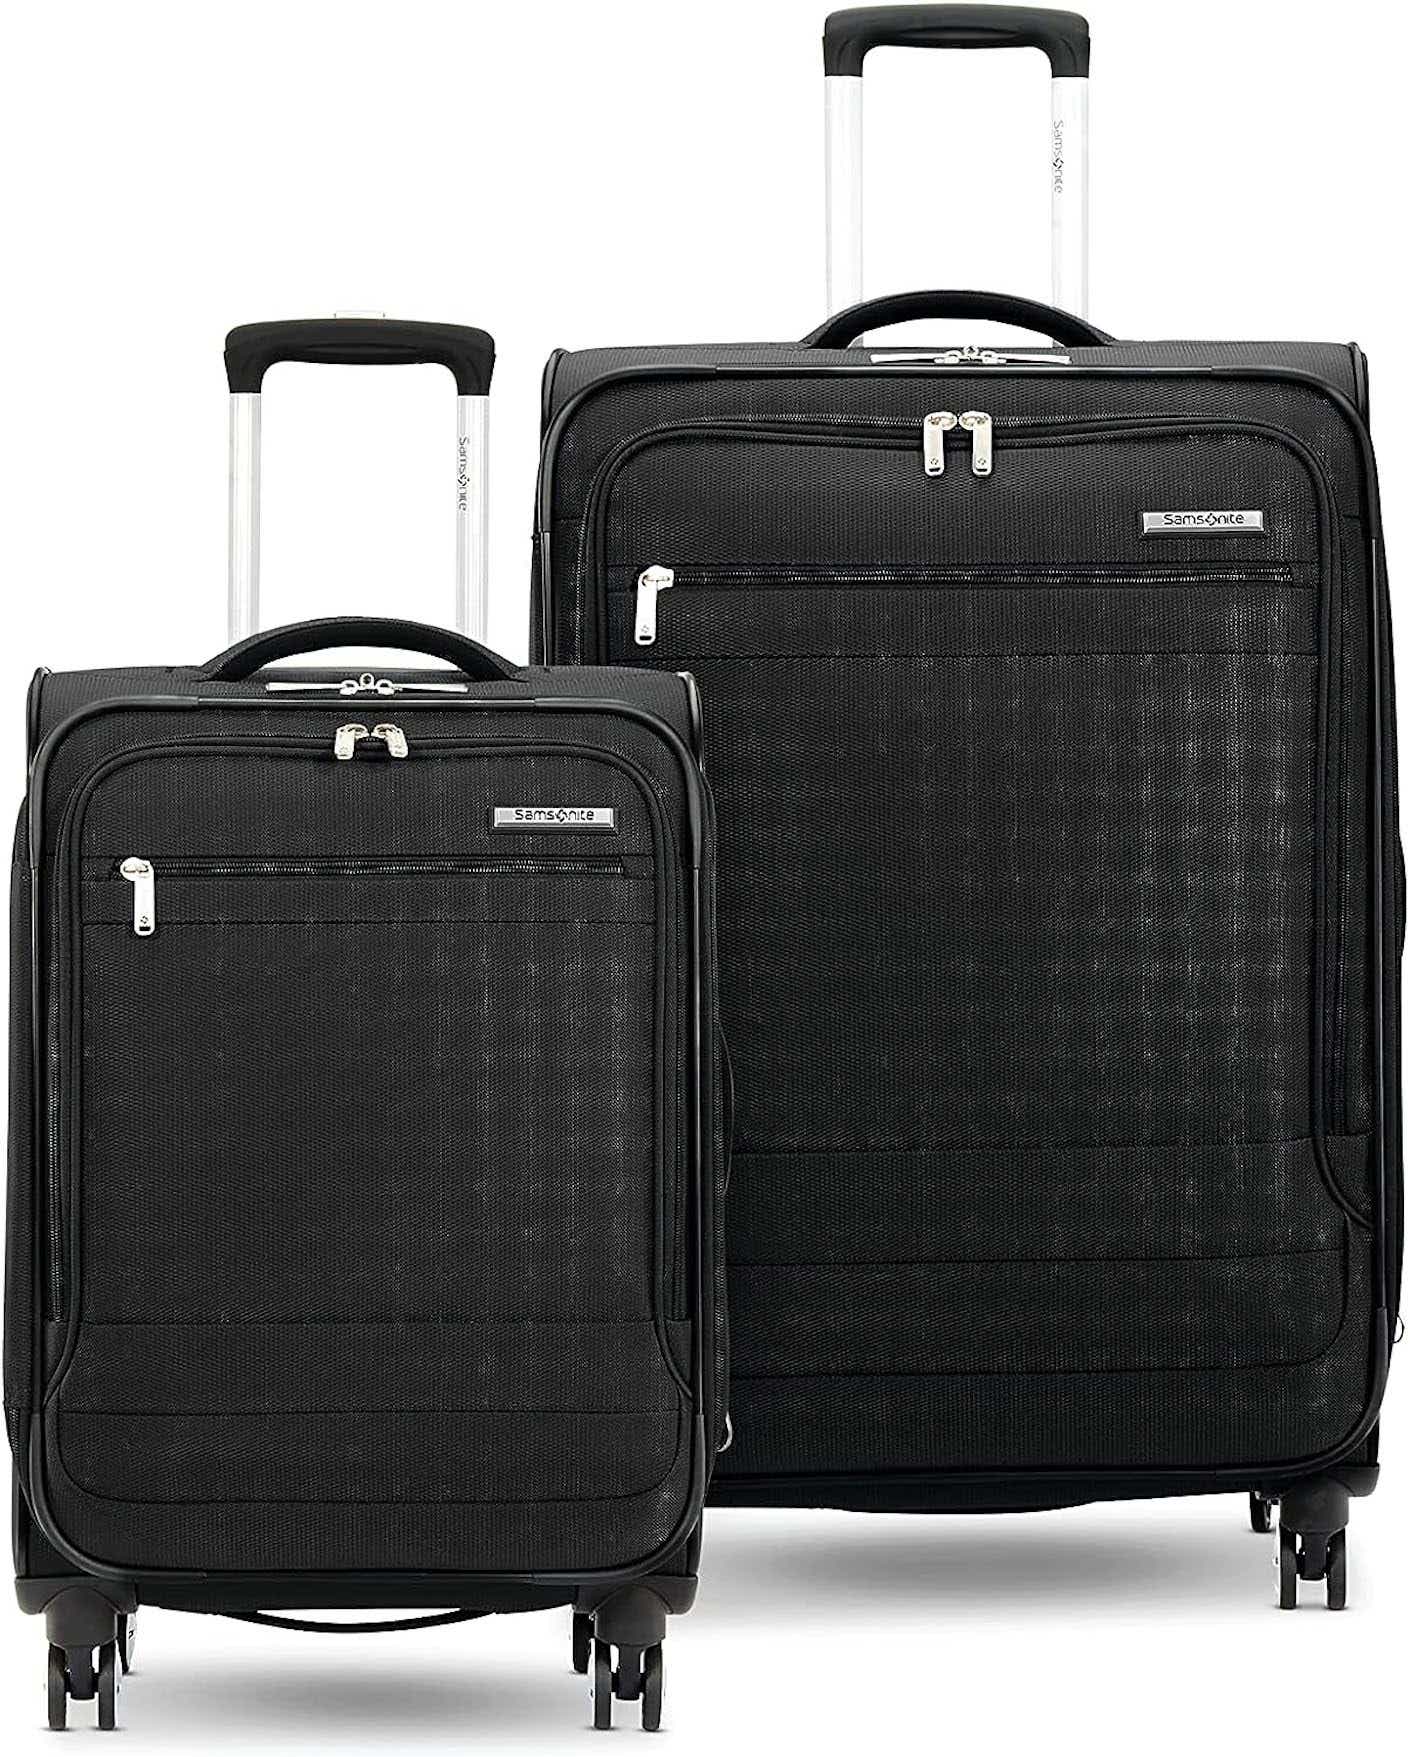 A Samsonite luggage set.